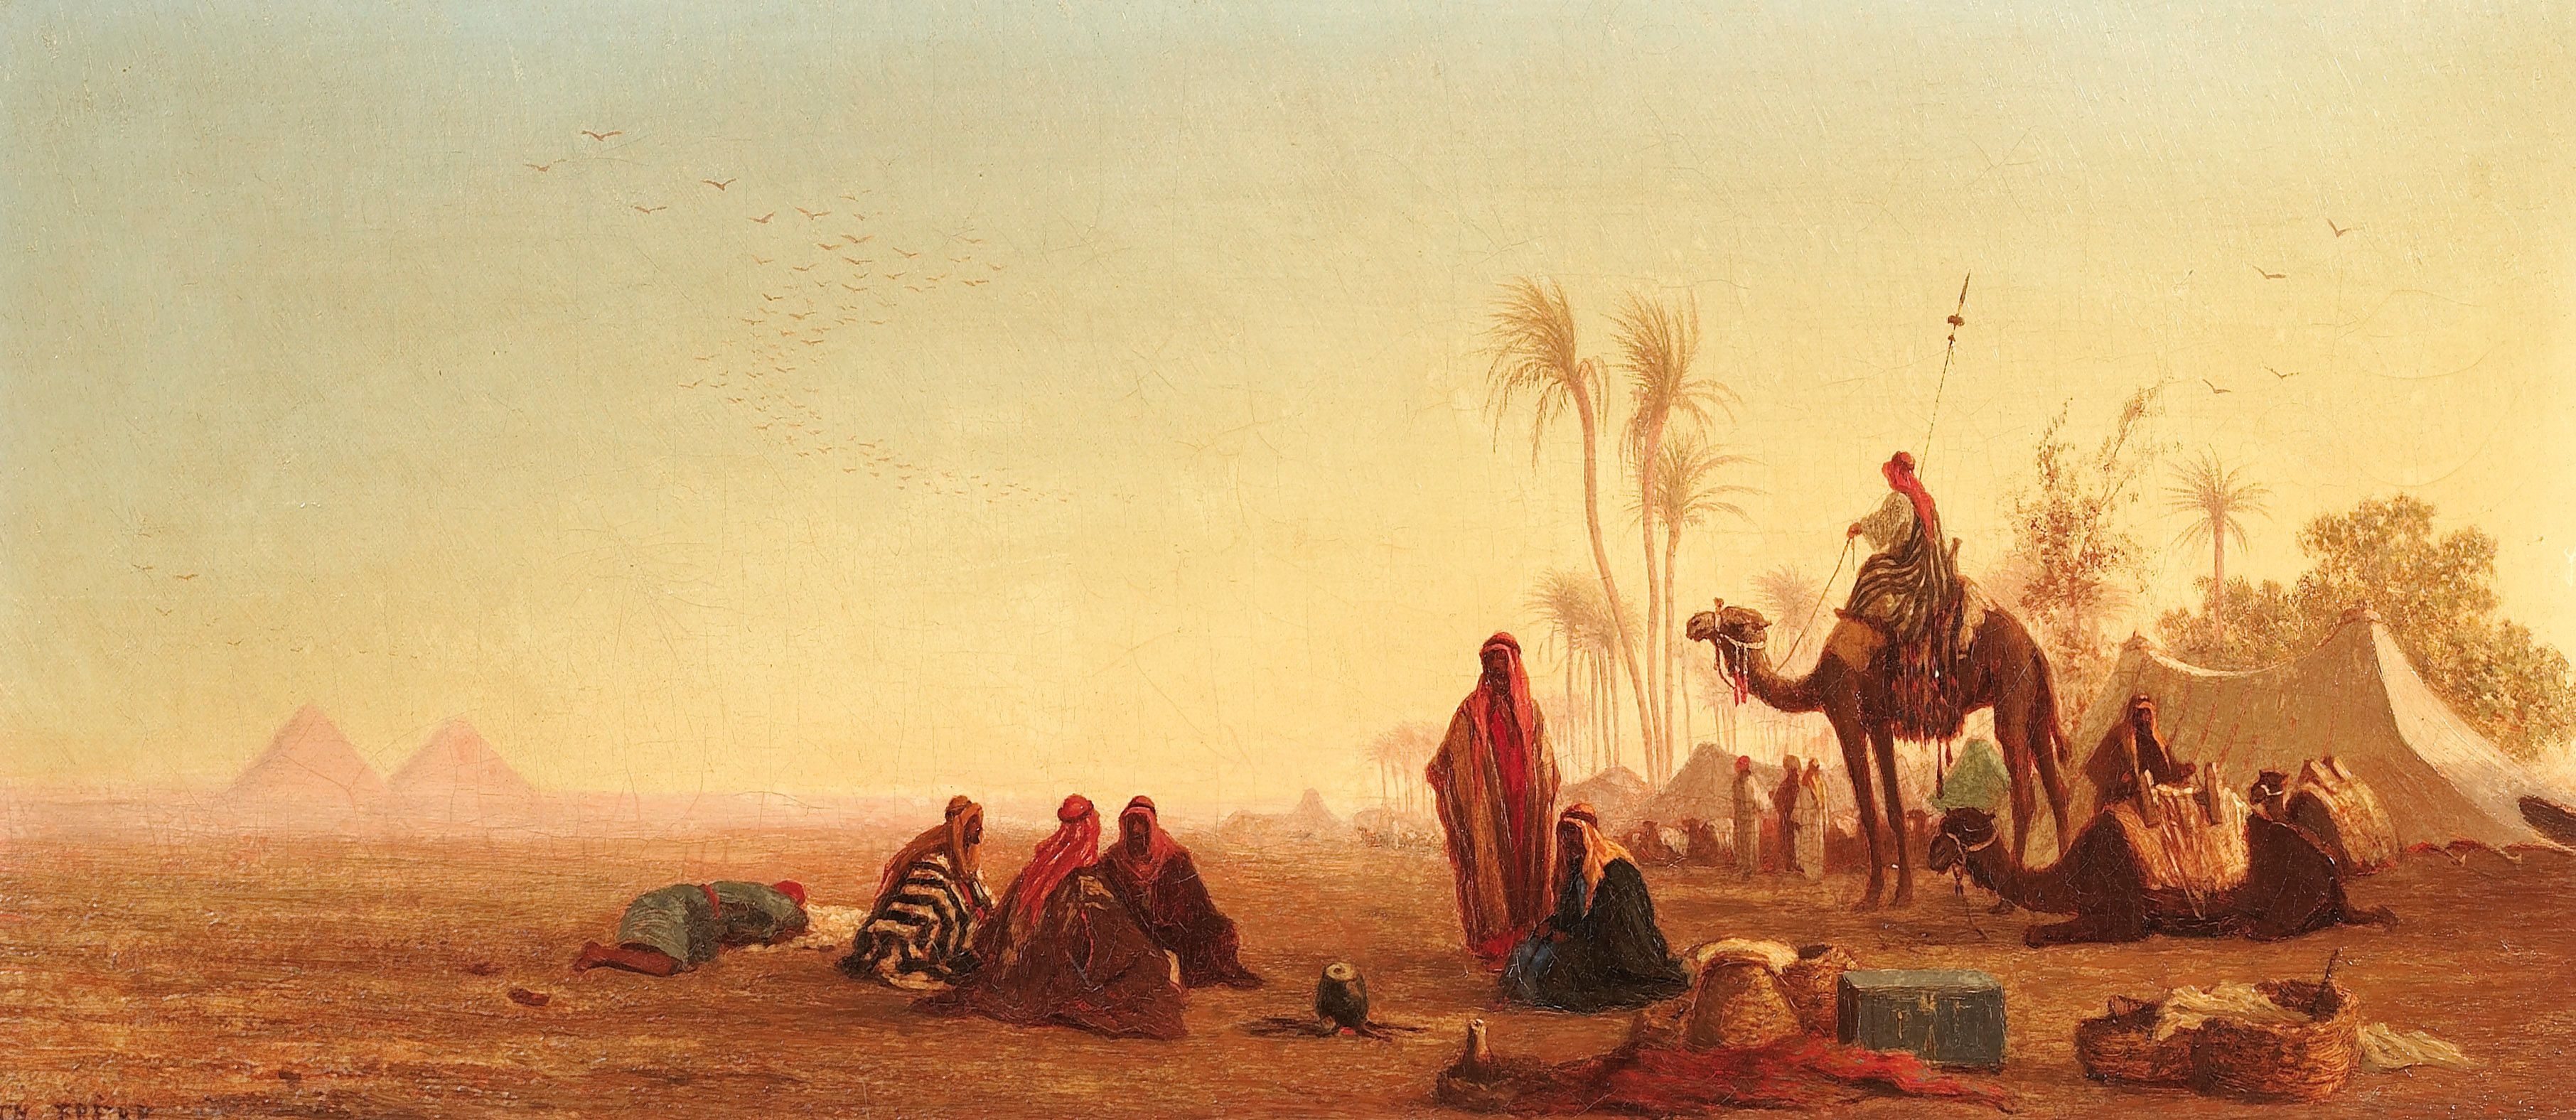 Караван в оазисе. Египет. 1871 Год. Айвазовский